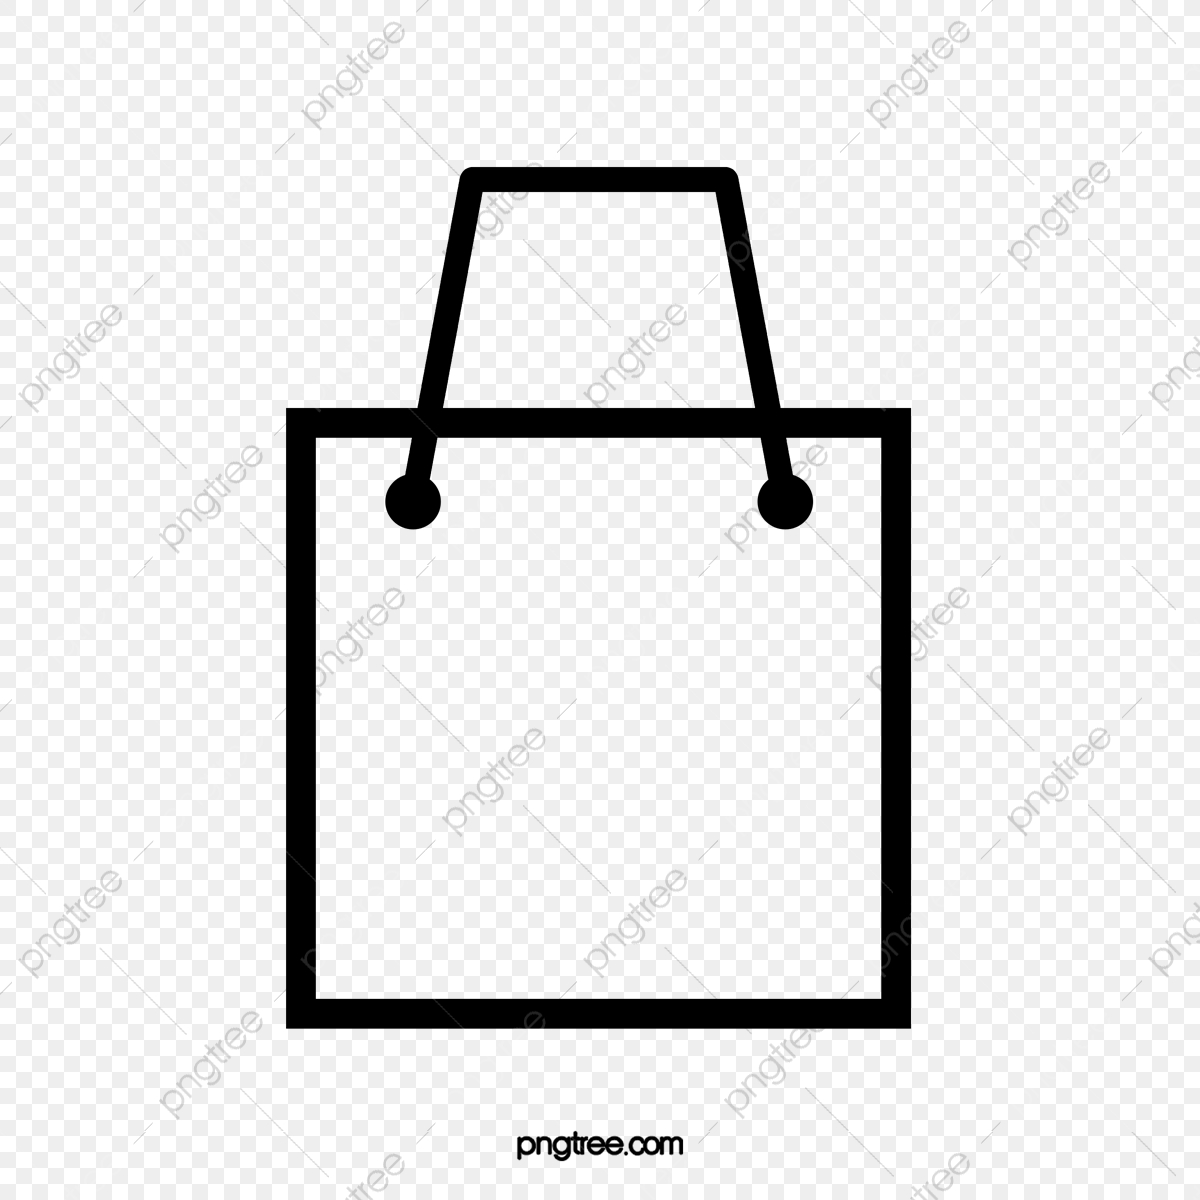 Shopping Bag, Bag Clipart, Creative Shopping Bags PNG.